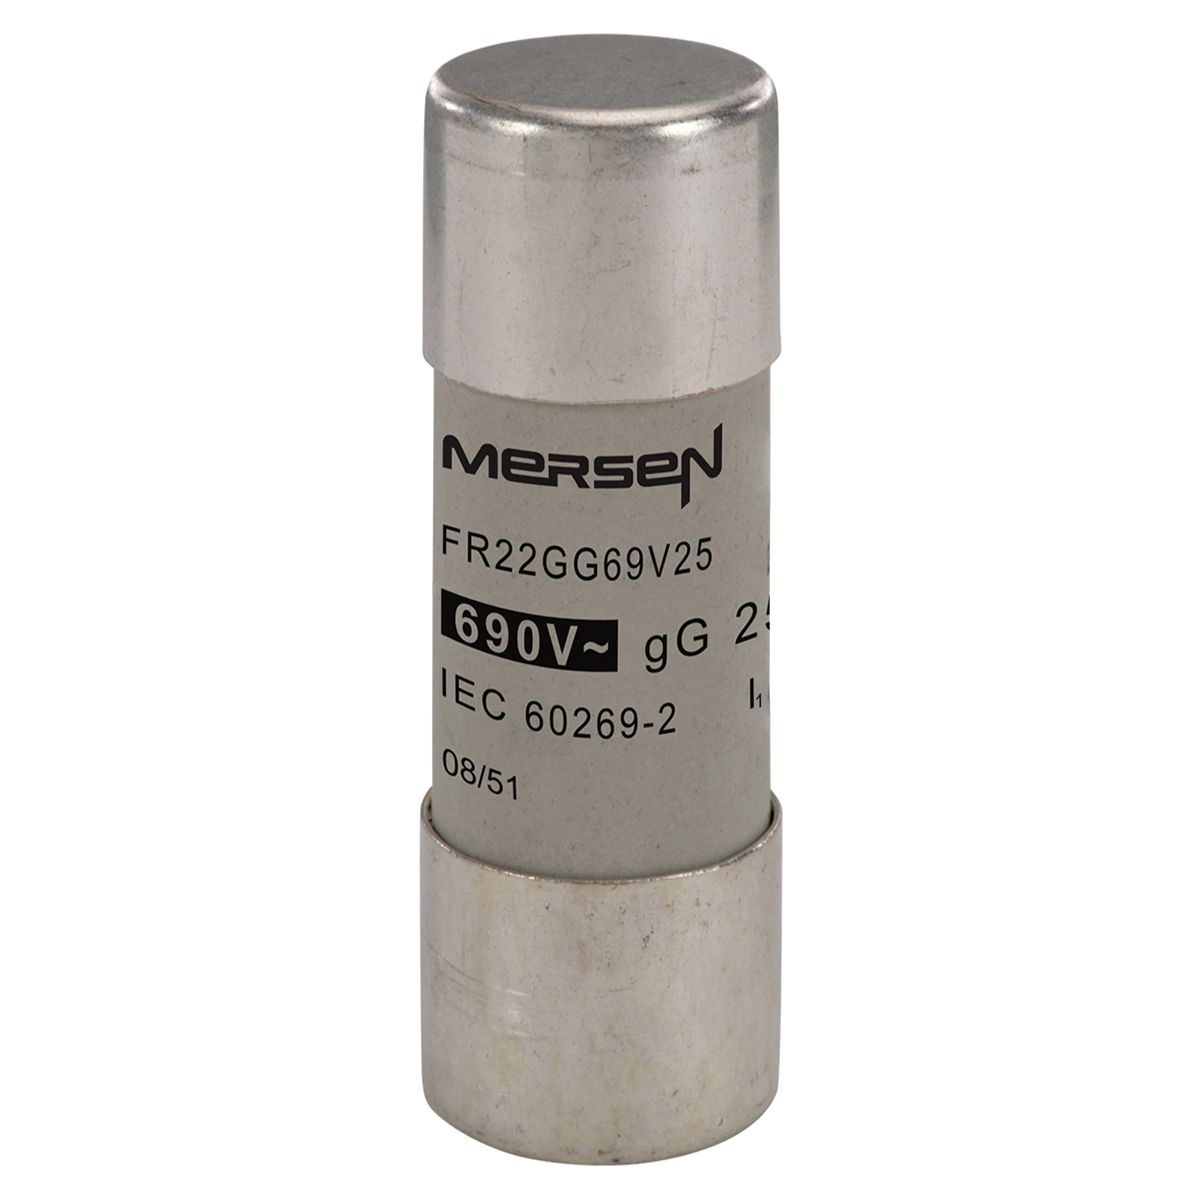 N212072 - Cylindrical fuse-link gG 690VAC 22.2x58, 25A